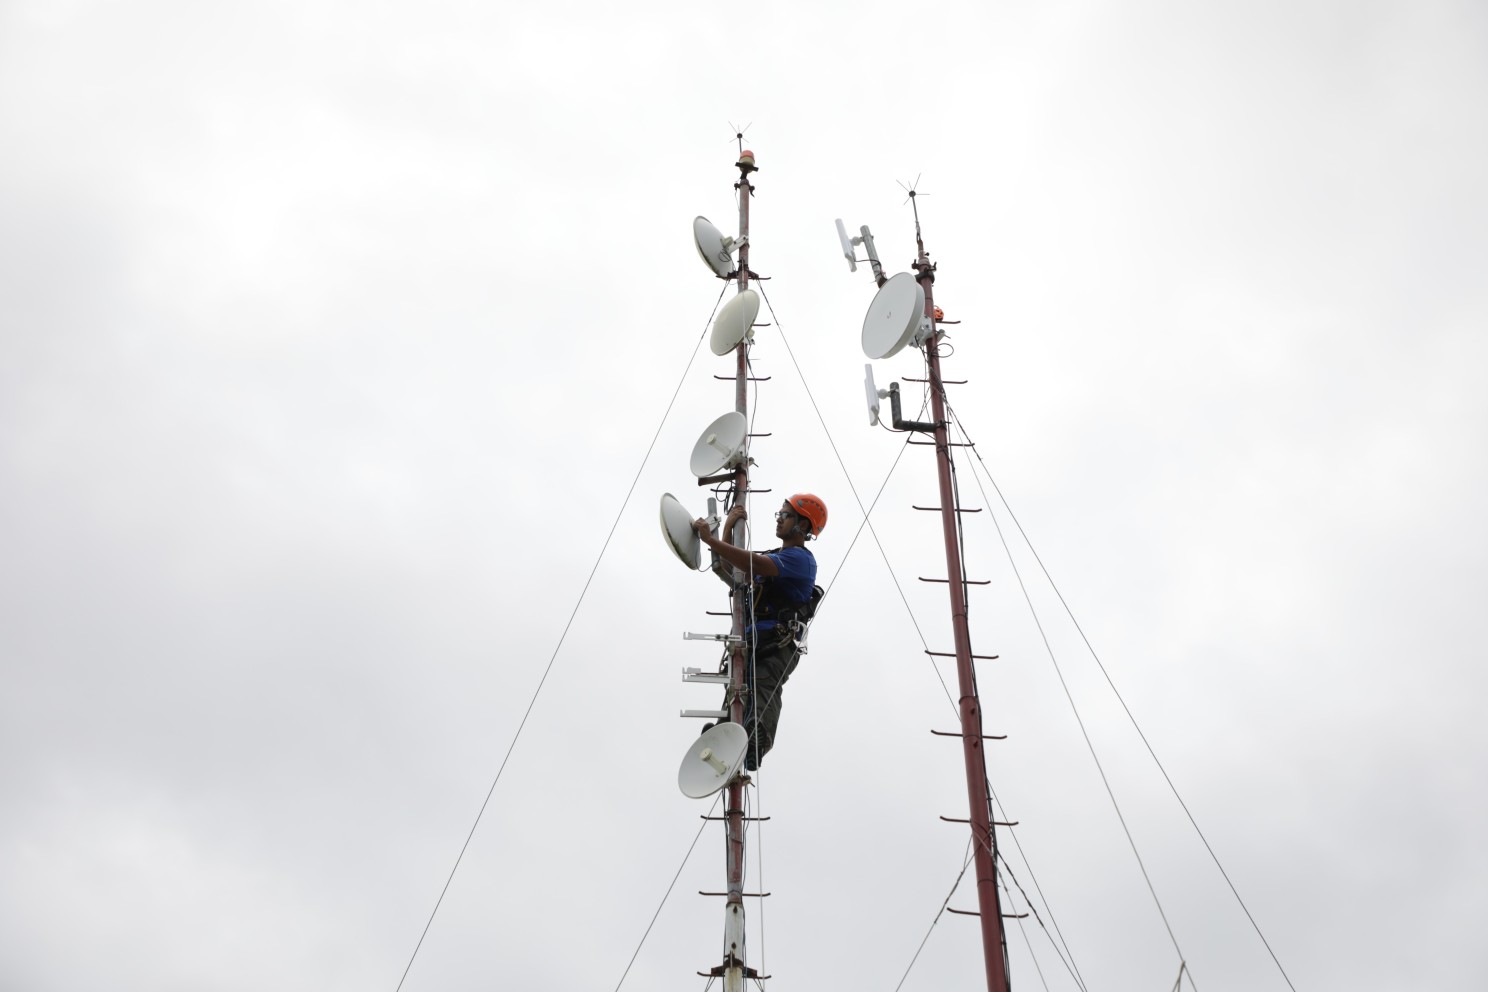 Shaown climbs a telecommunications tower